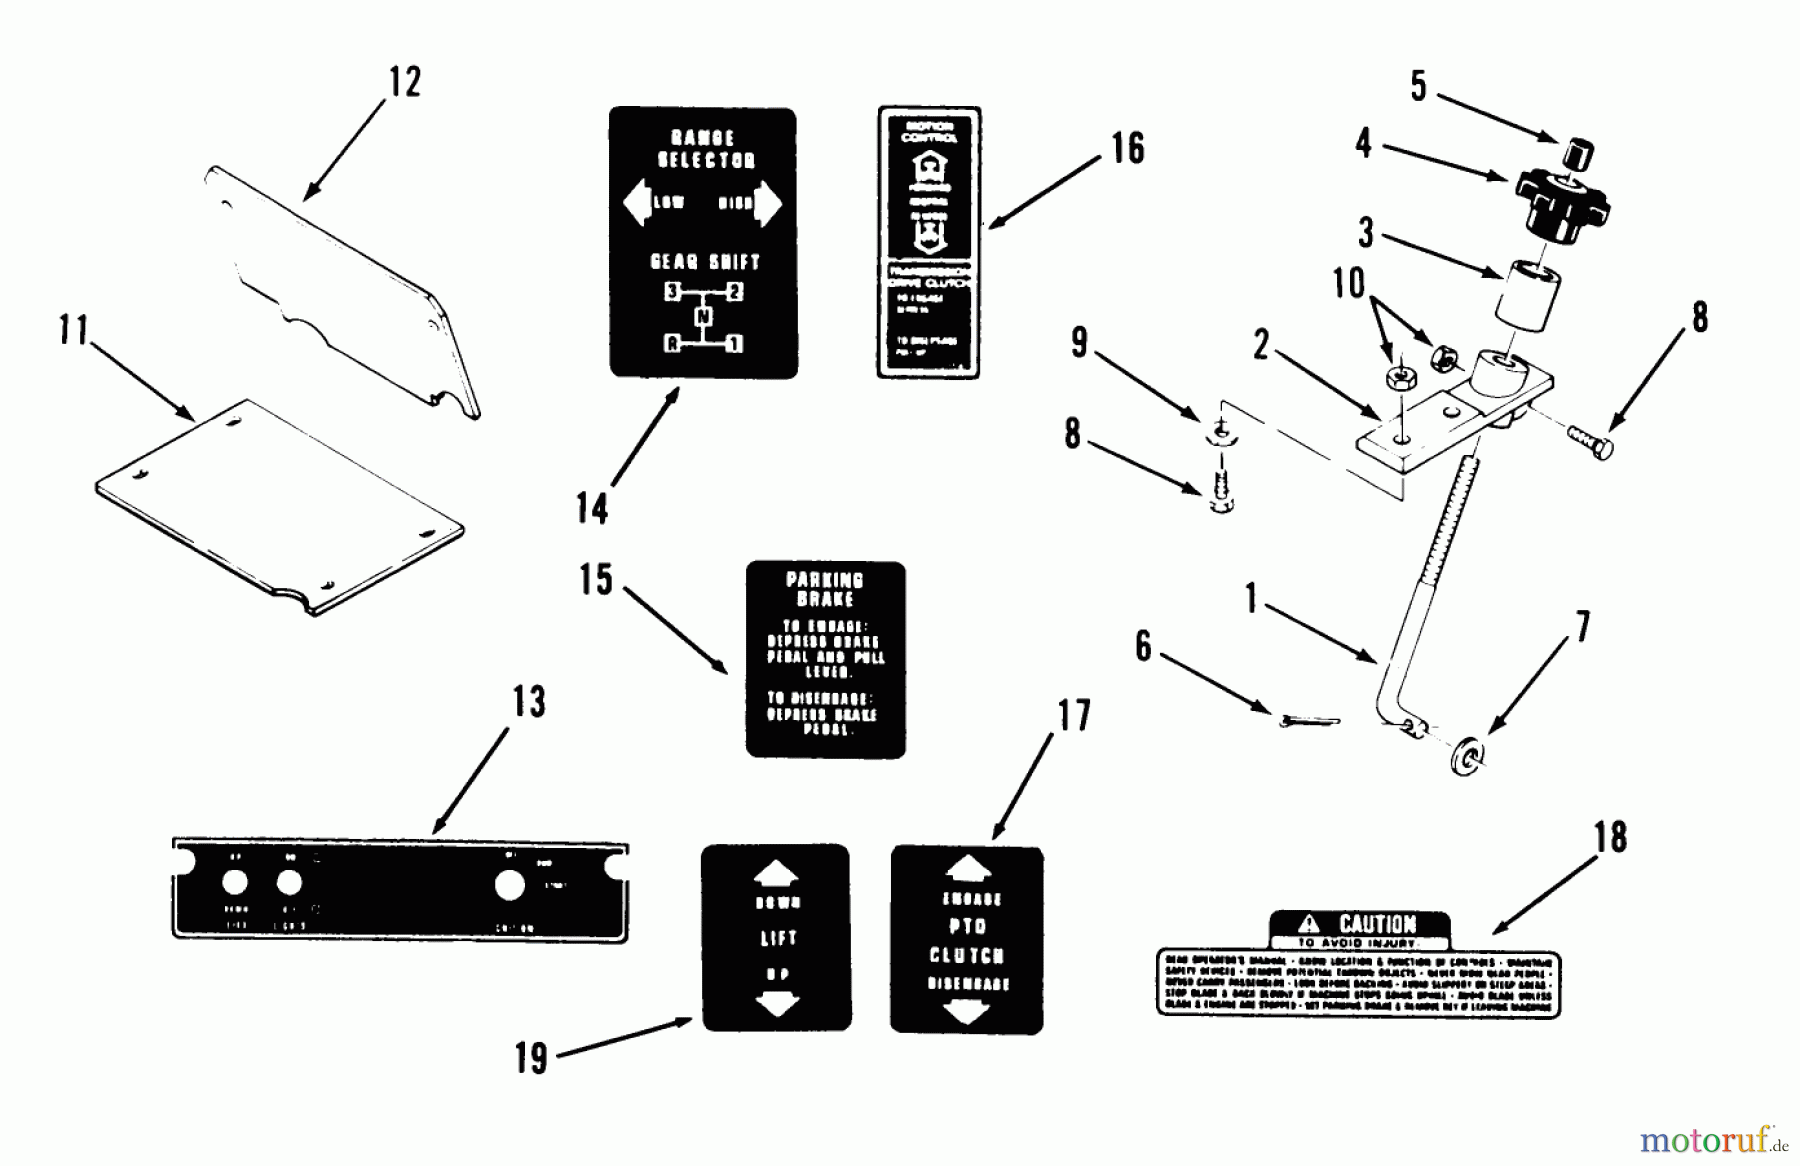  Toro Neu Accessories, Mower 86726 - Toro Dial-A-Hite, 1989 DIAL-A-HITE PARTS LIST FACTORY ORDER NO. 86726